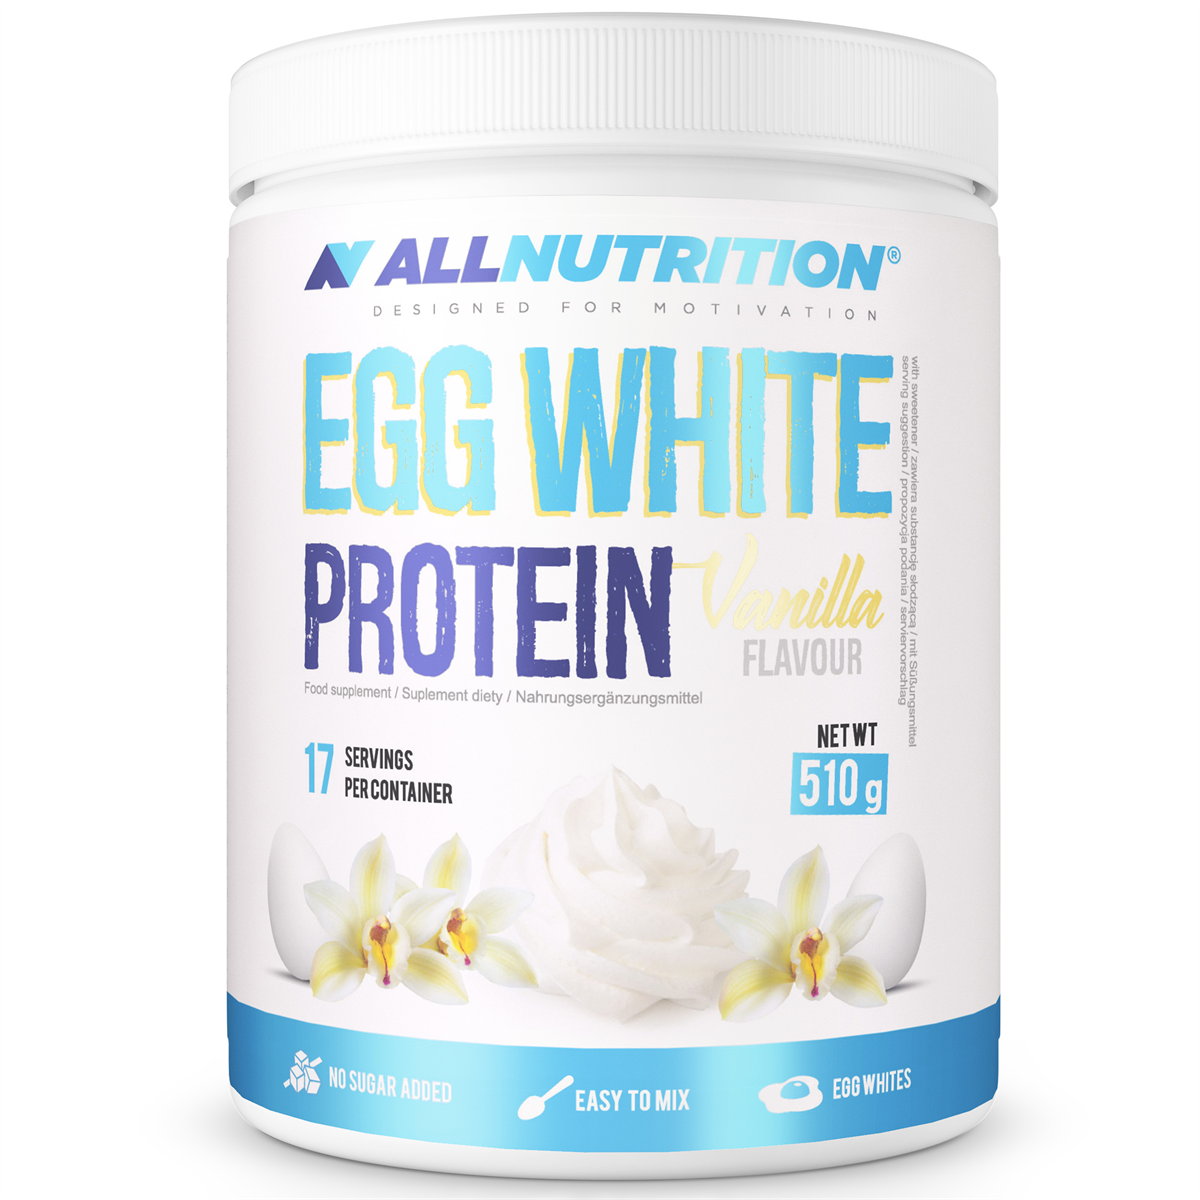 All Nutrition Egg White Protein 510g